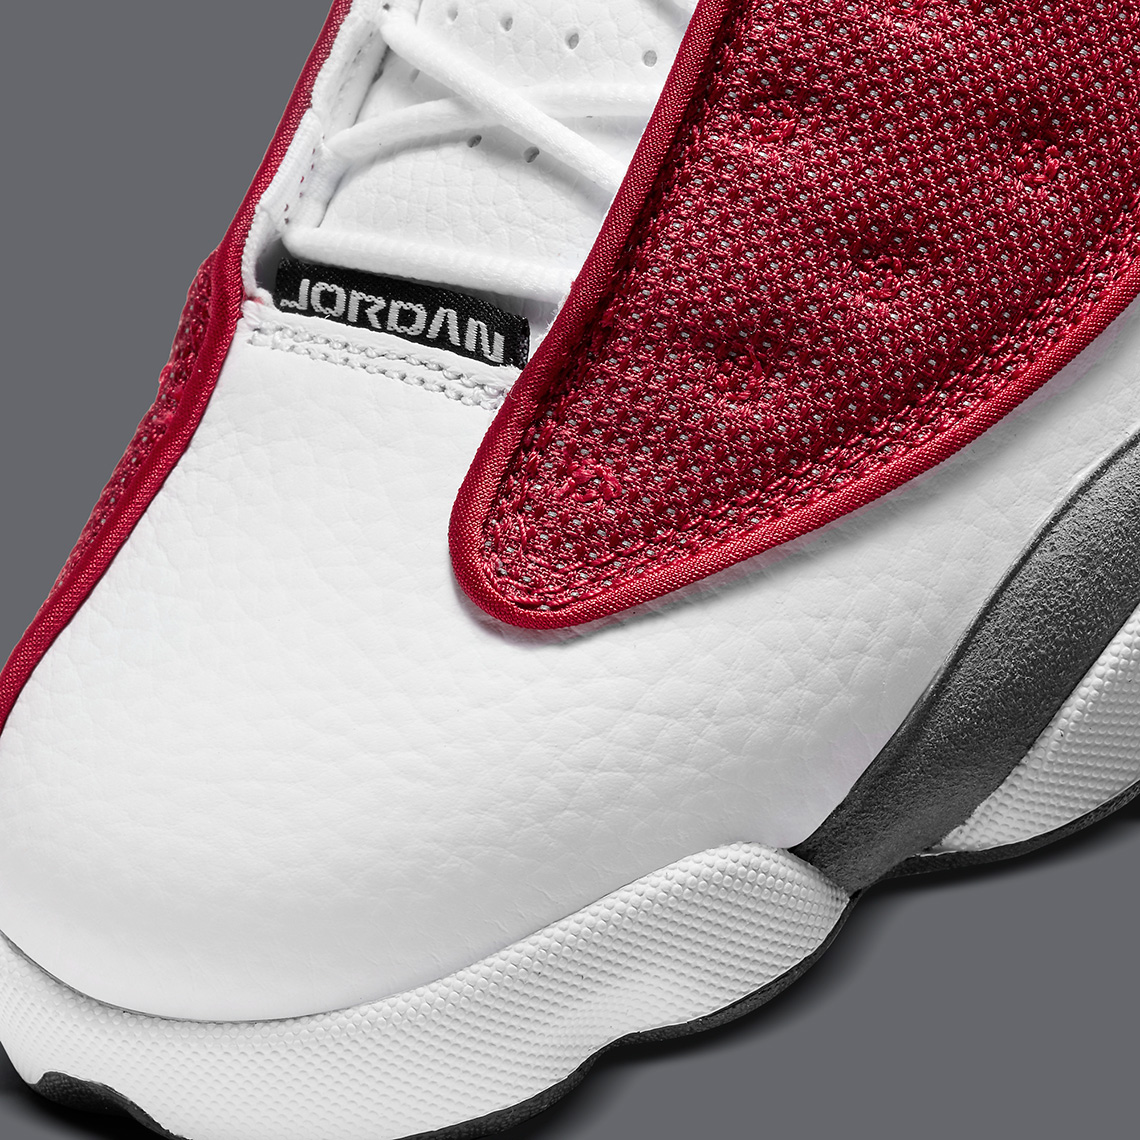 Nike Air Jordan 1 Retro Low Og Unc White Blue Sneakers Men S Red Flint 2021 Release Date 5